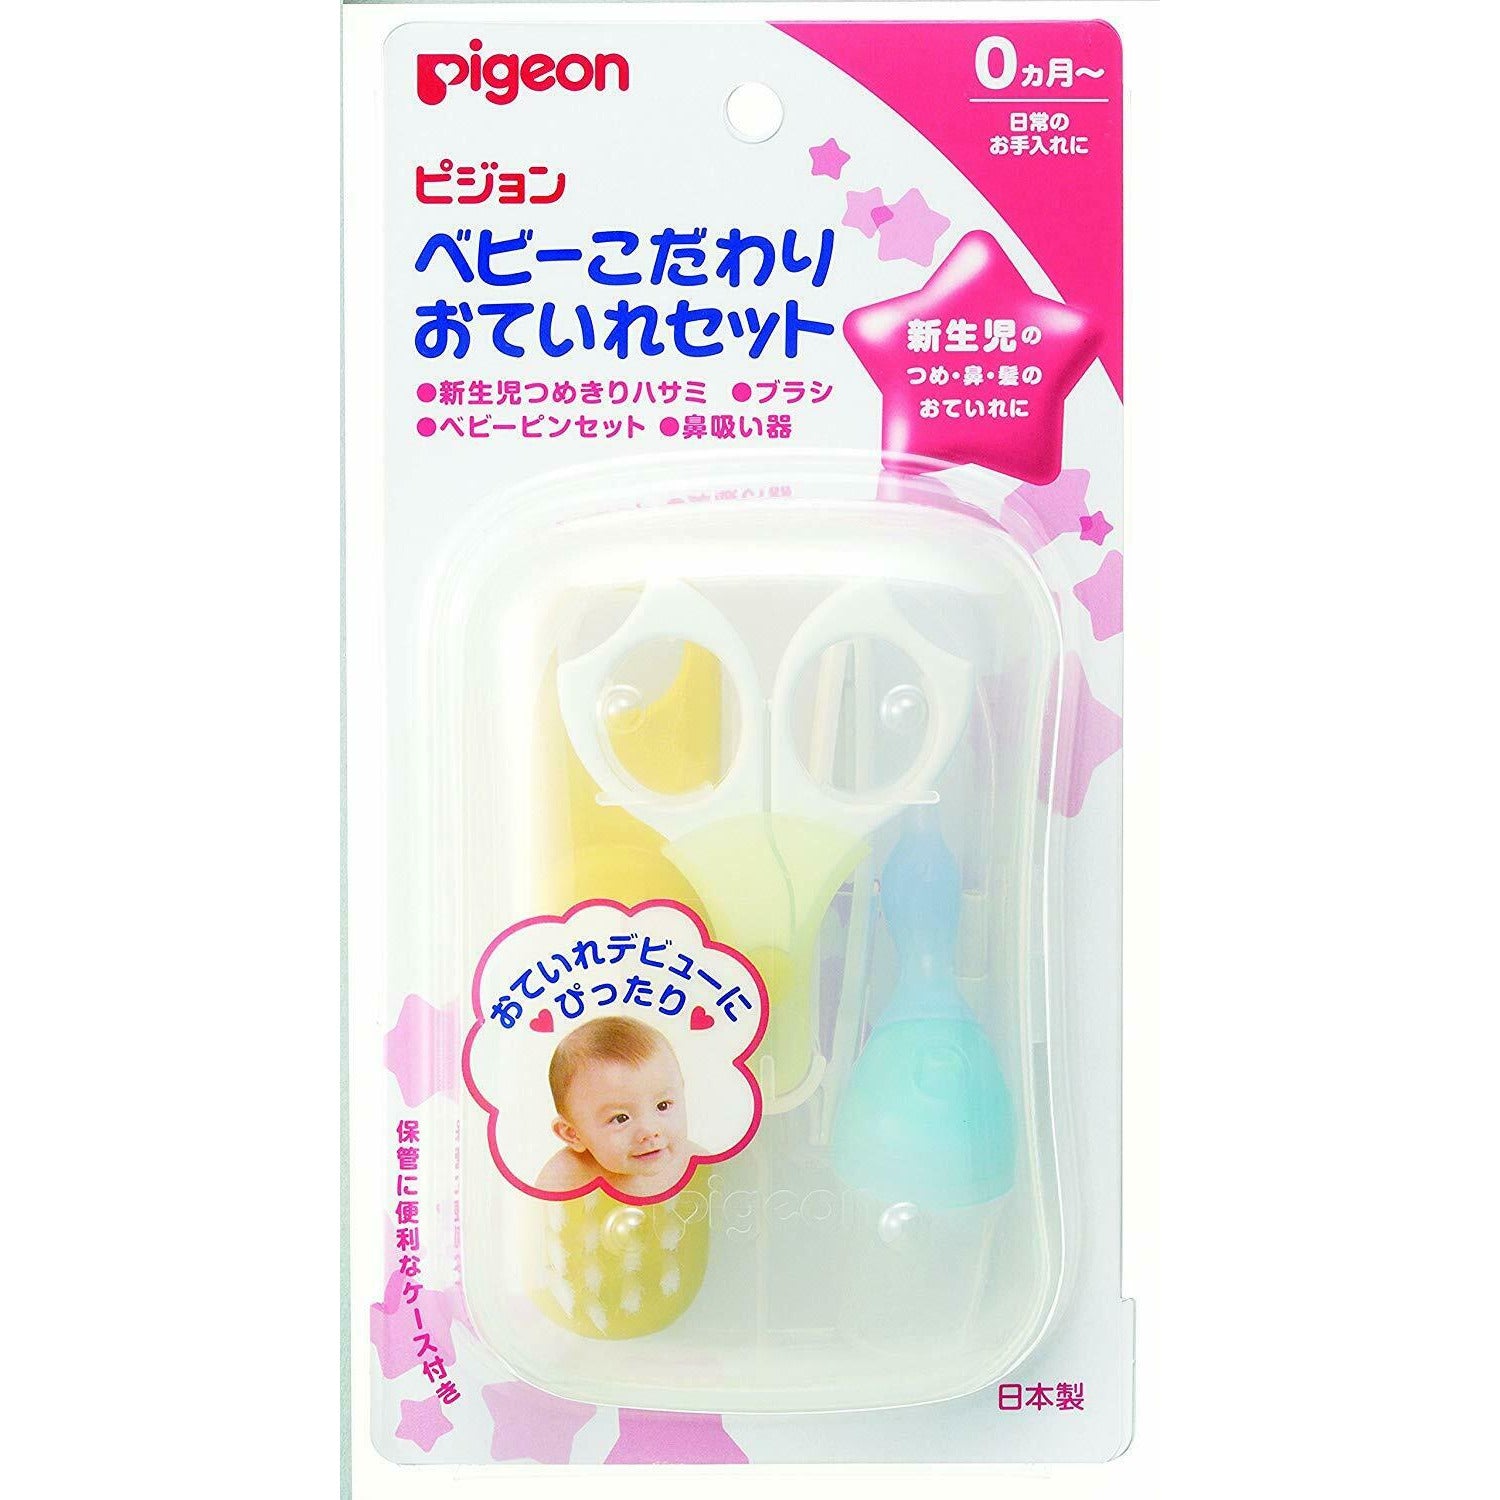 Pigeon Baby Care Set Nail Scissors / Hairbrush / Tweezers / Nasal Aspirator